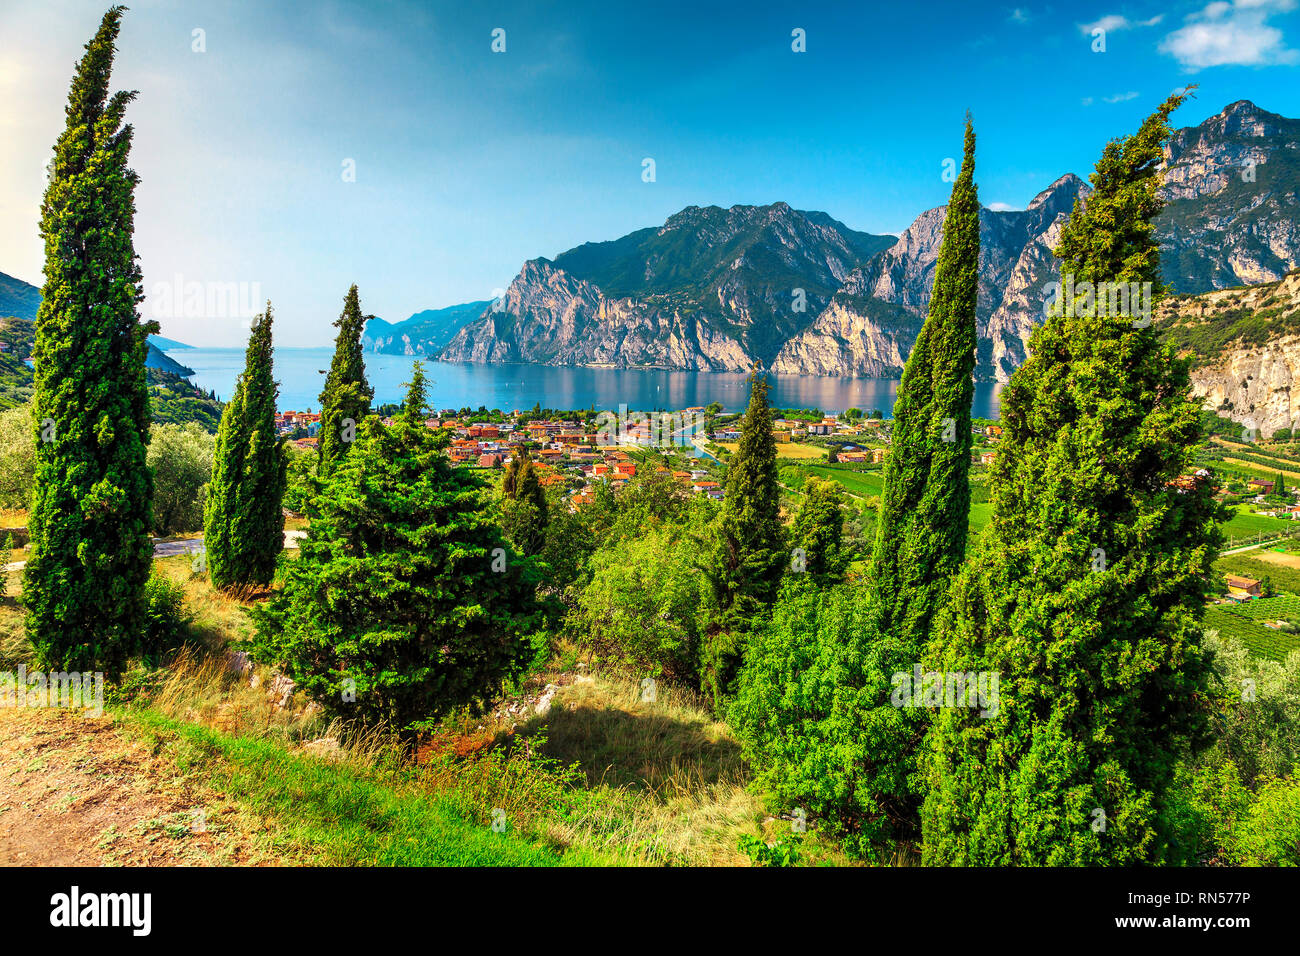 Amazing summer holiday destination with lake Garda and high mountains, Torbole, Italy, Europe Stock Photo